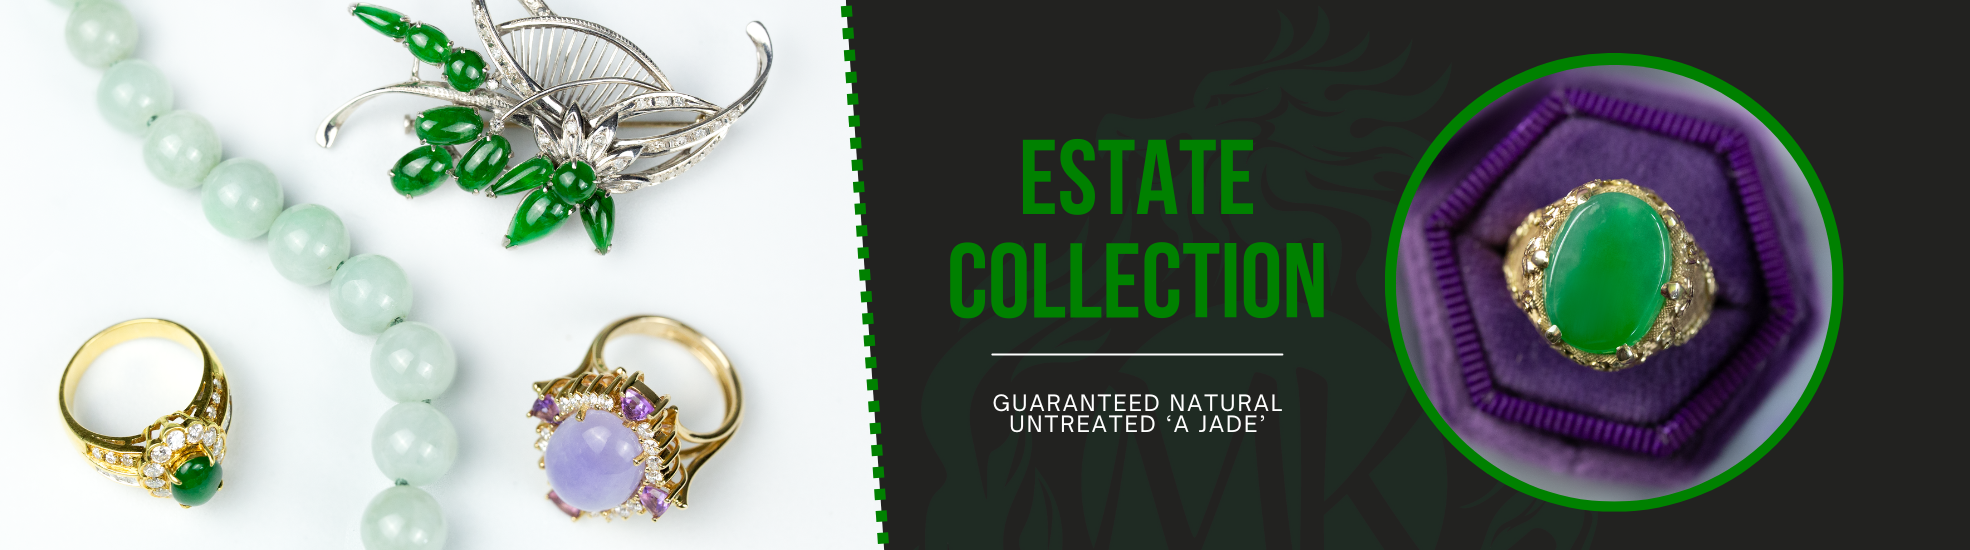 Mason Kay Estate Jade Jewelry - Certified Natural Jade Jewelry